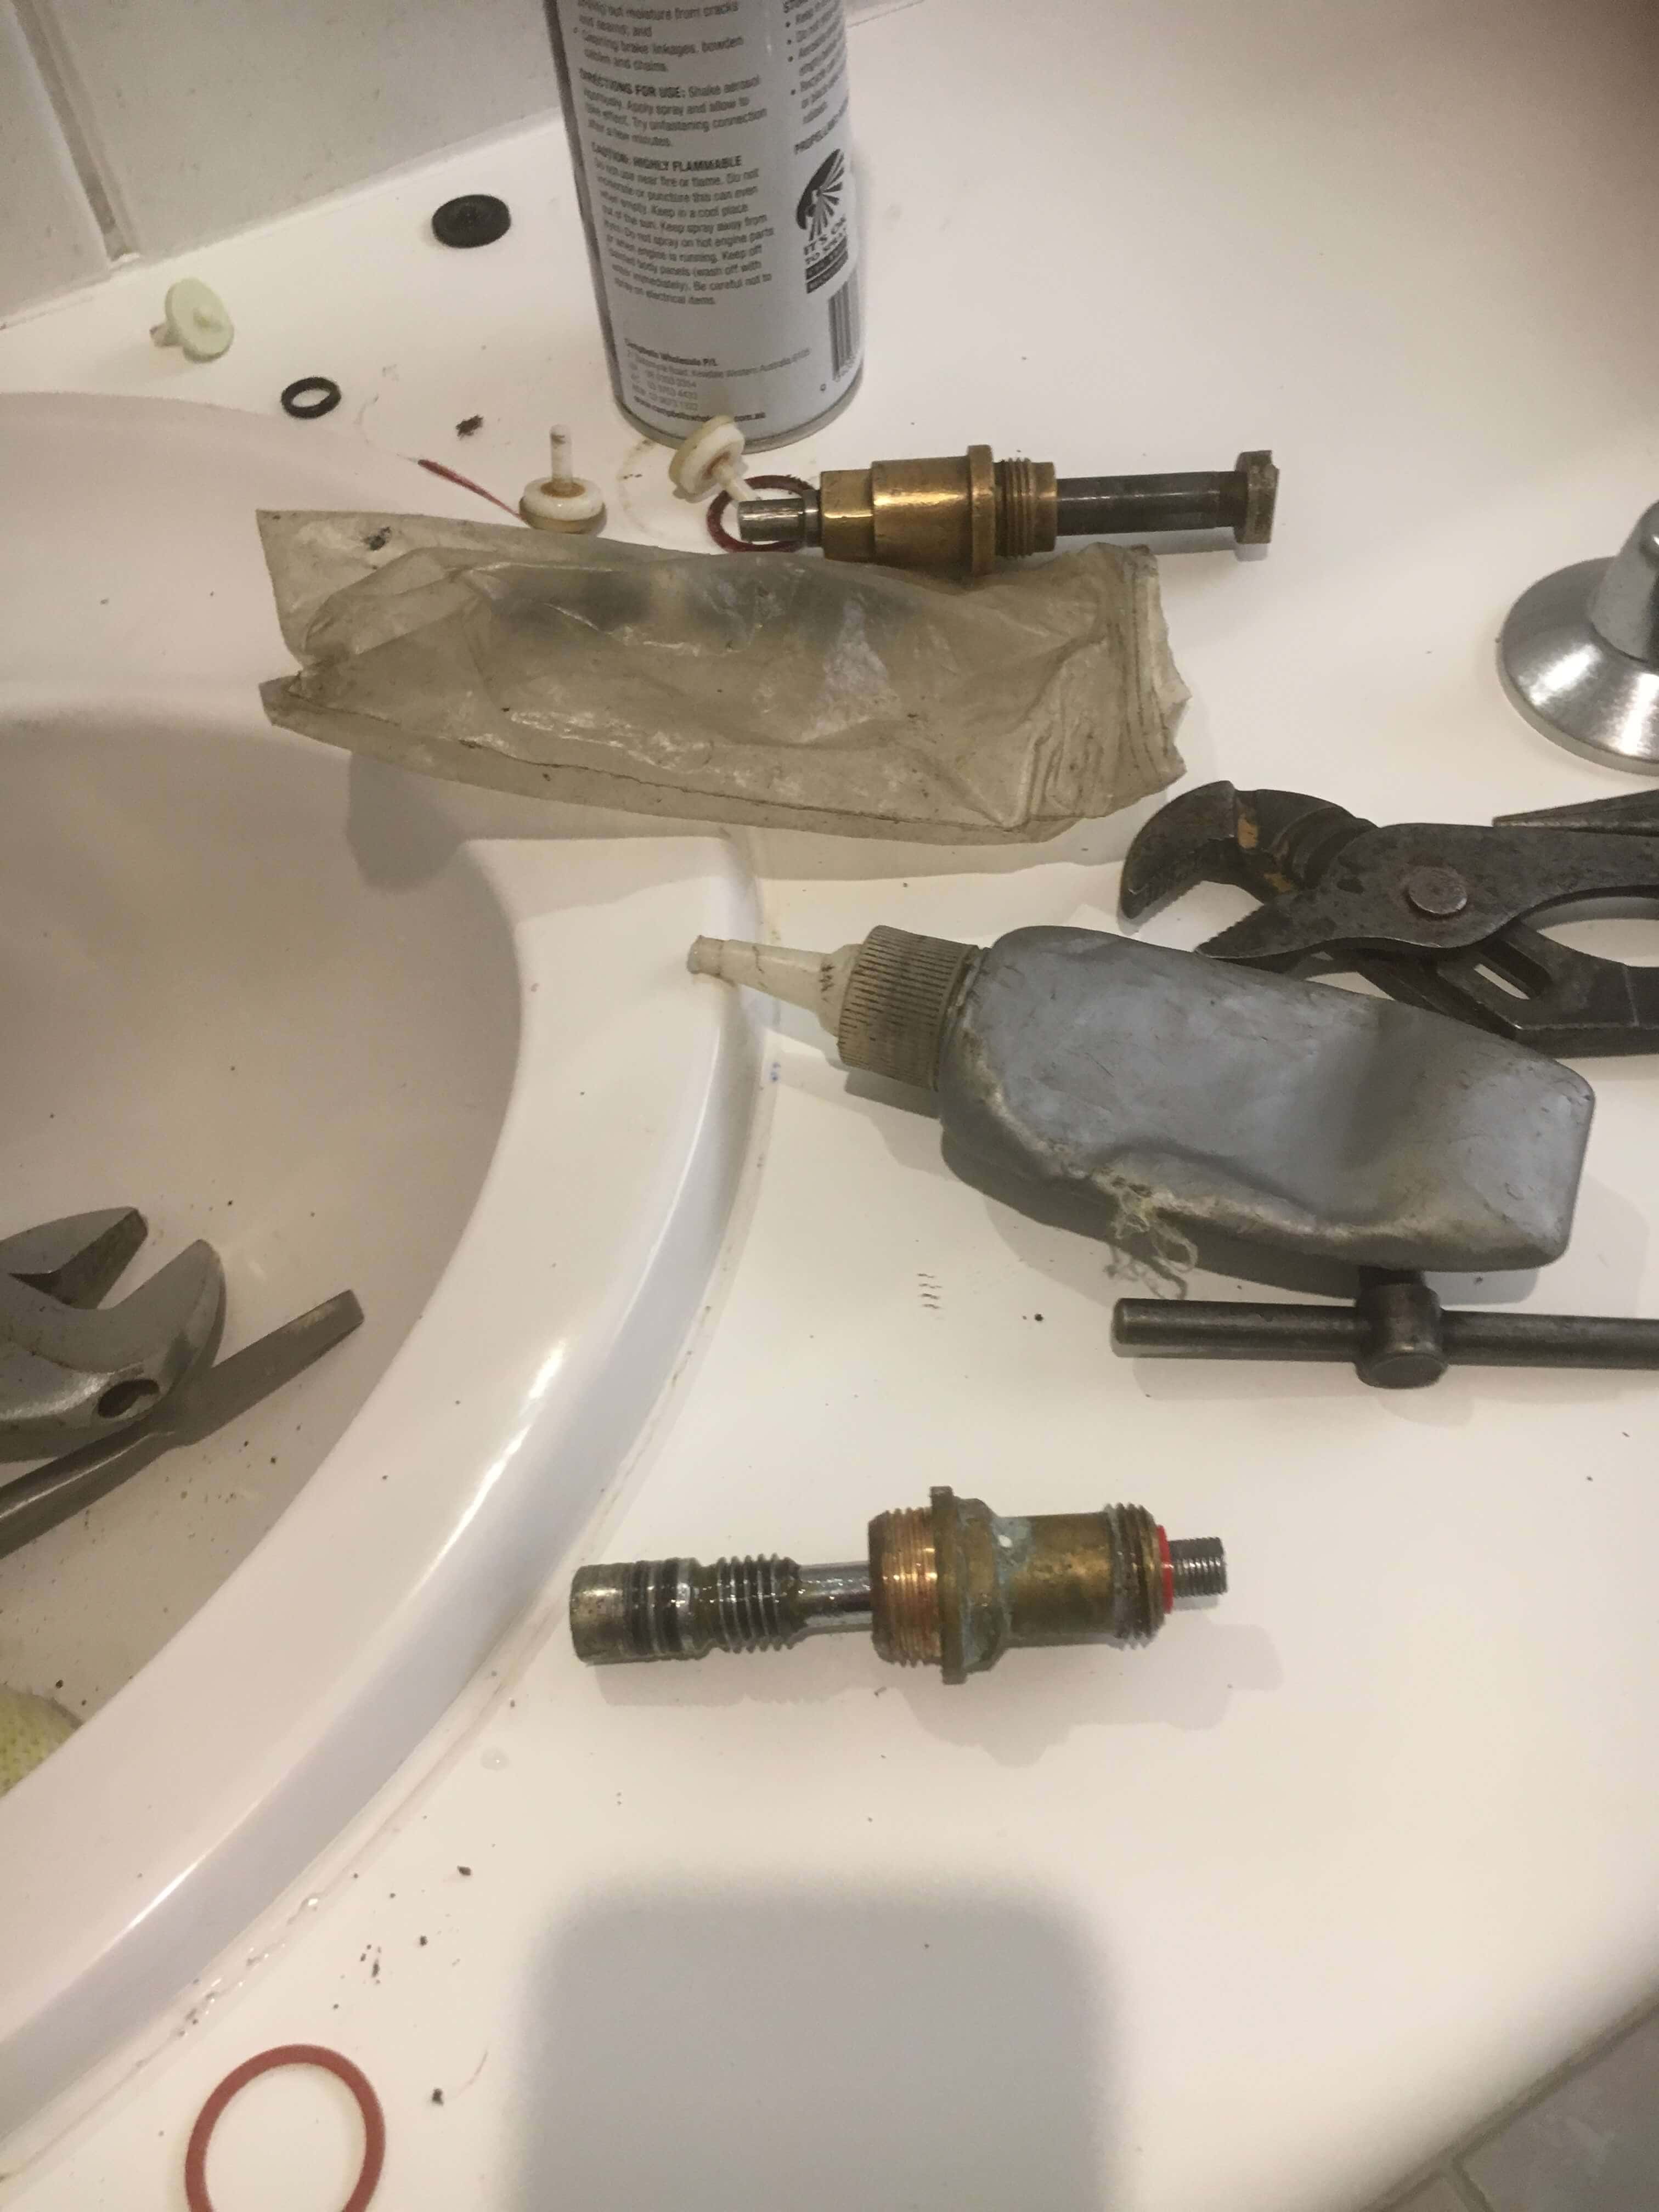 Everyday Plumbers Leaking Tap Repairs - Sink Accessories and Tools Above Ceramic Sink 2792